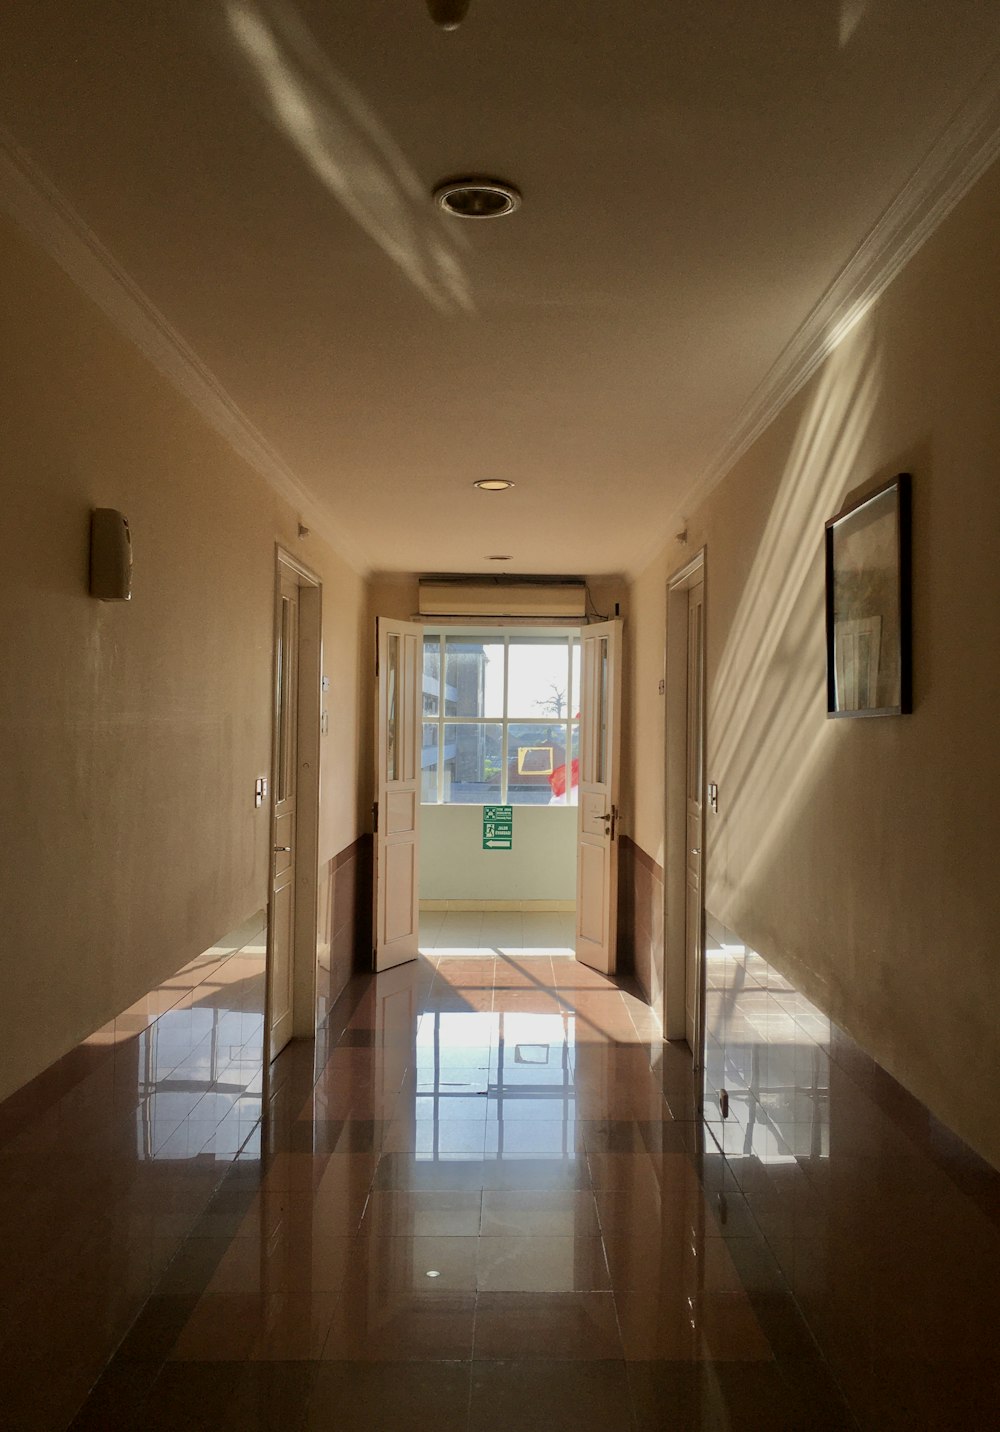 a hallway with a glass door